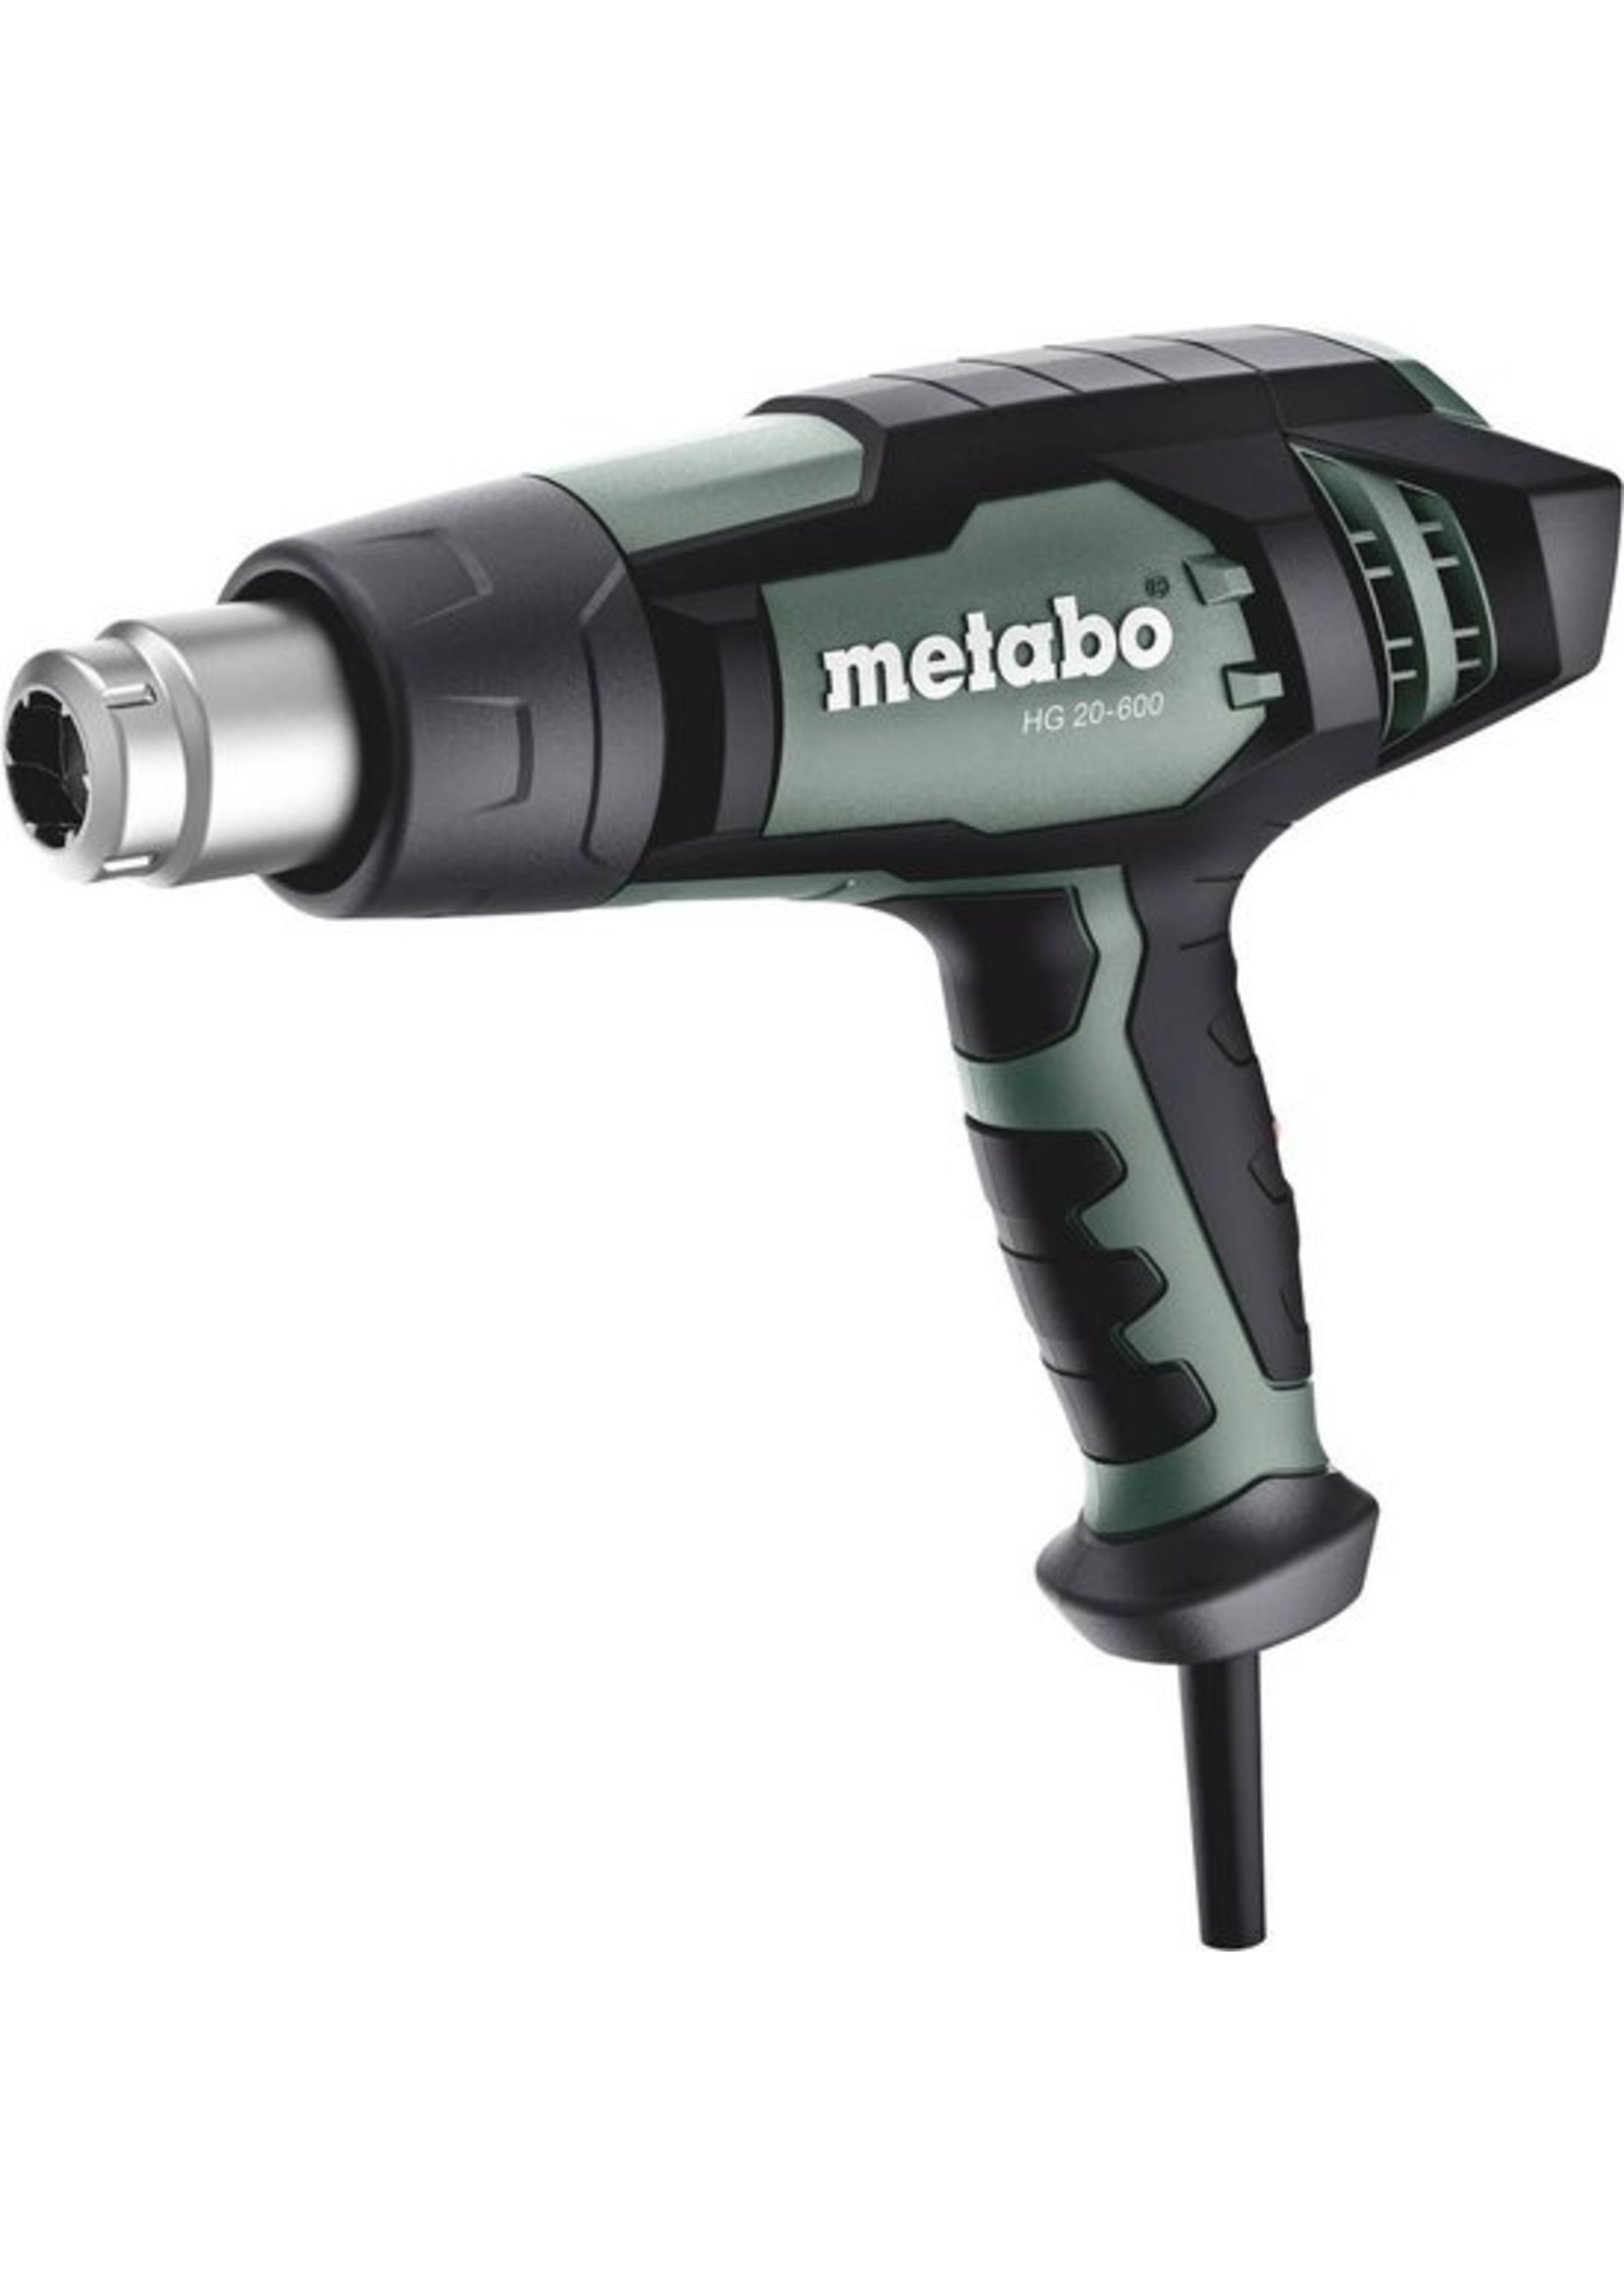 Metabo Metabo HG 20-600 Heteluchtpistool incl. accessoires in MetaBox - 2000W